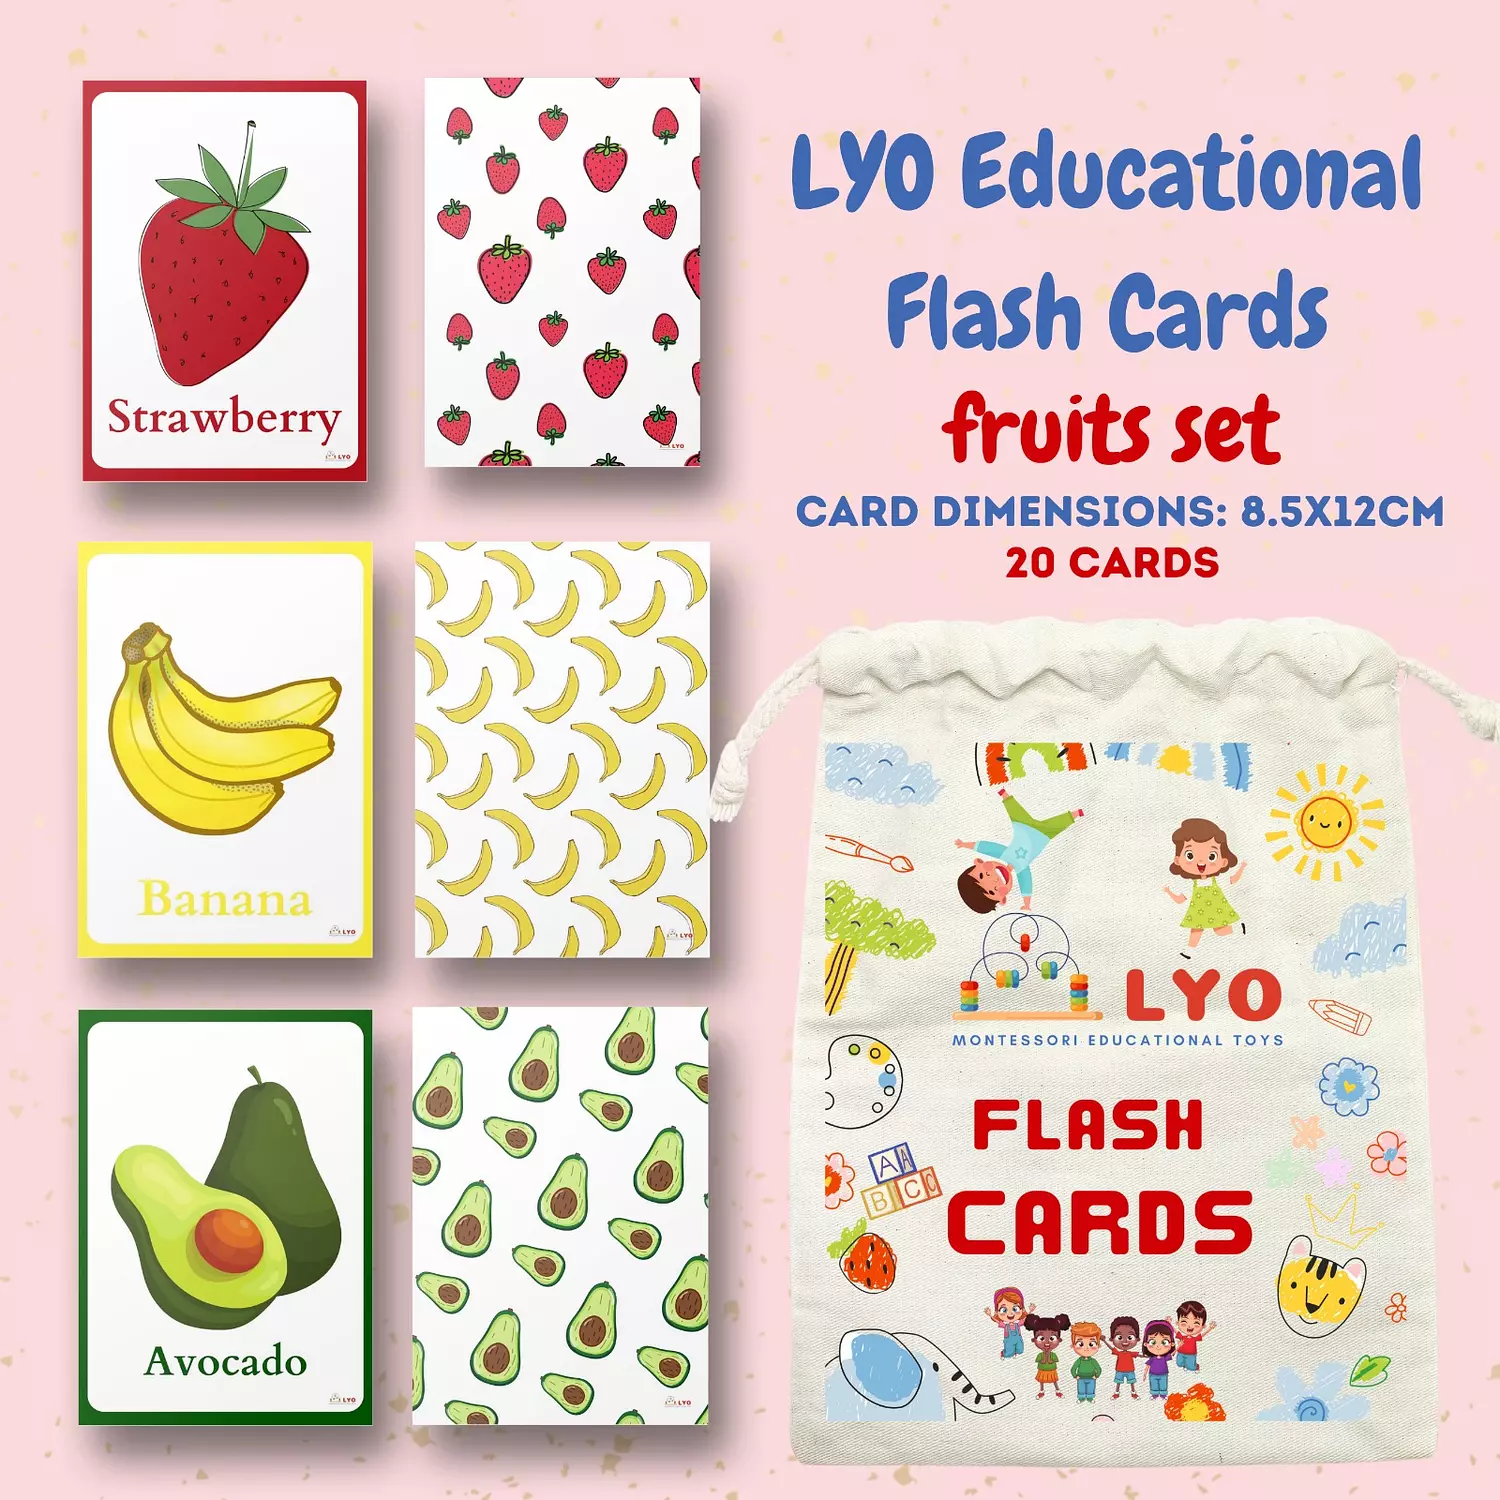 LYO Flash Cards (Fruits-Vegetables) hover image